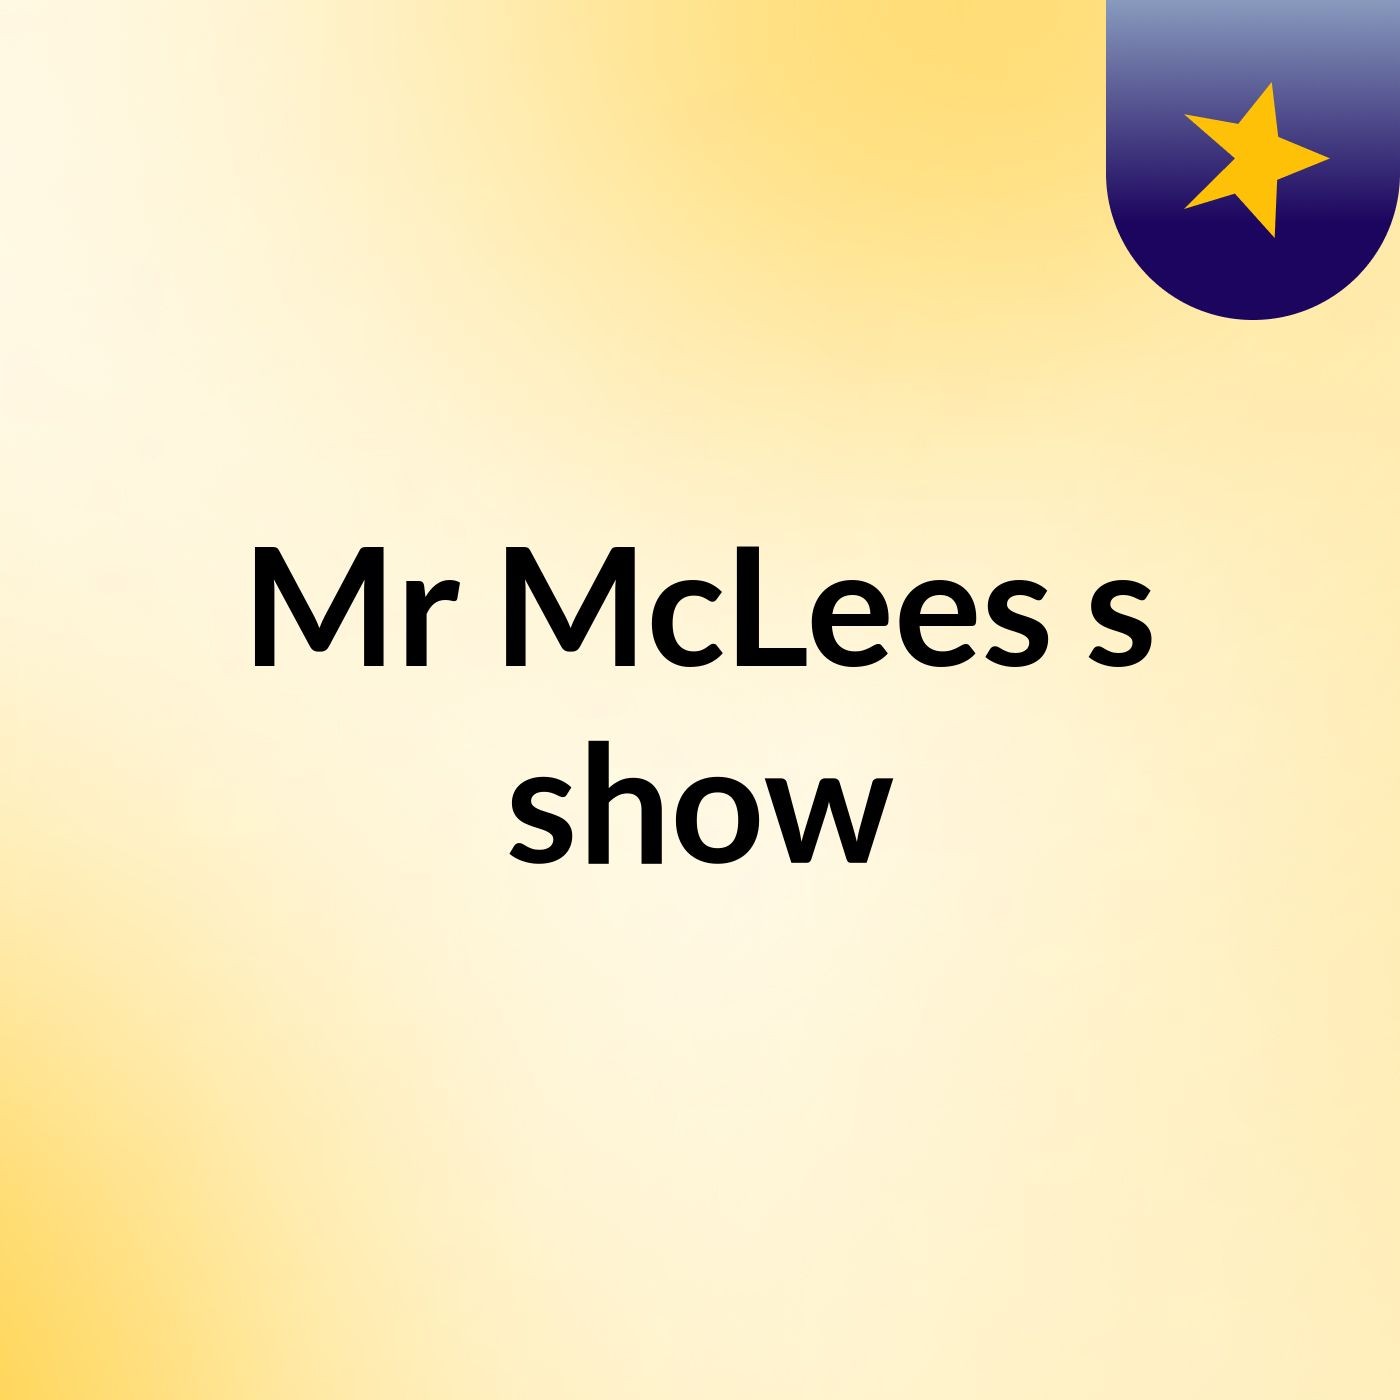 Mr McLees's show